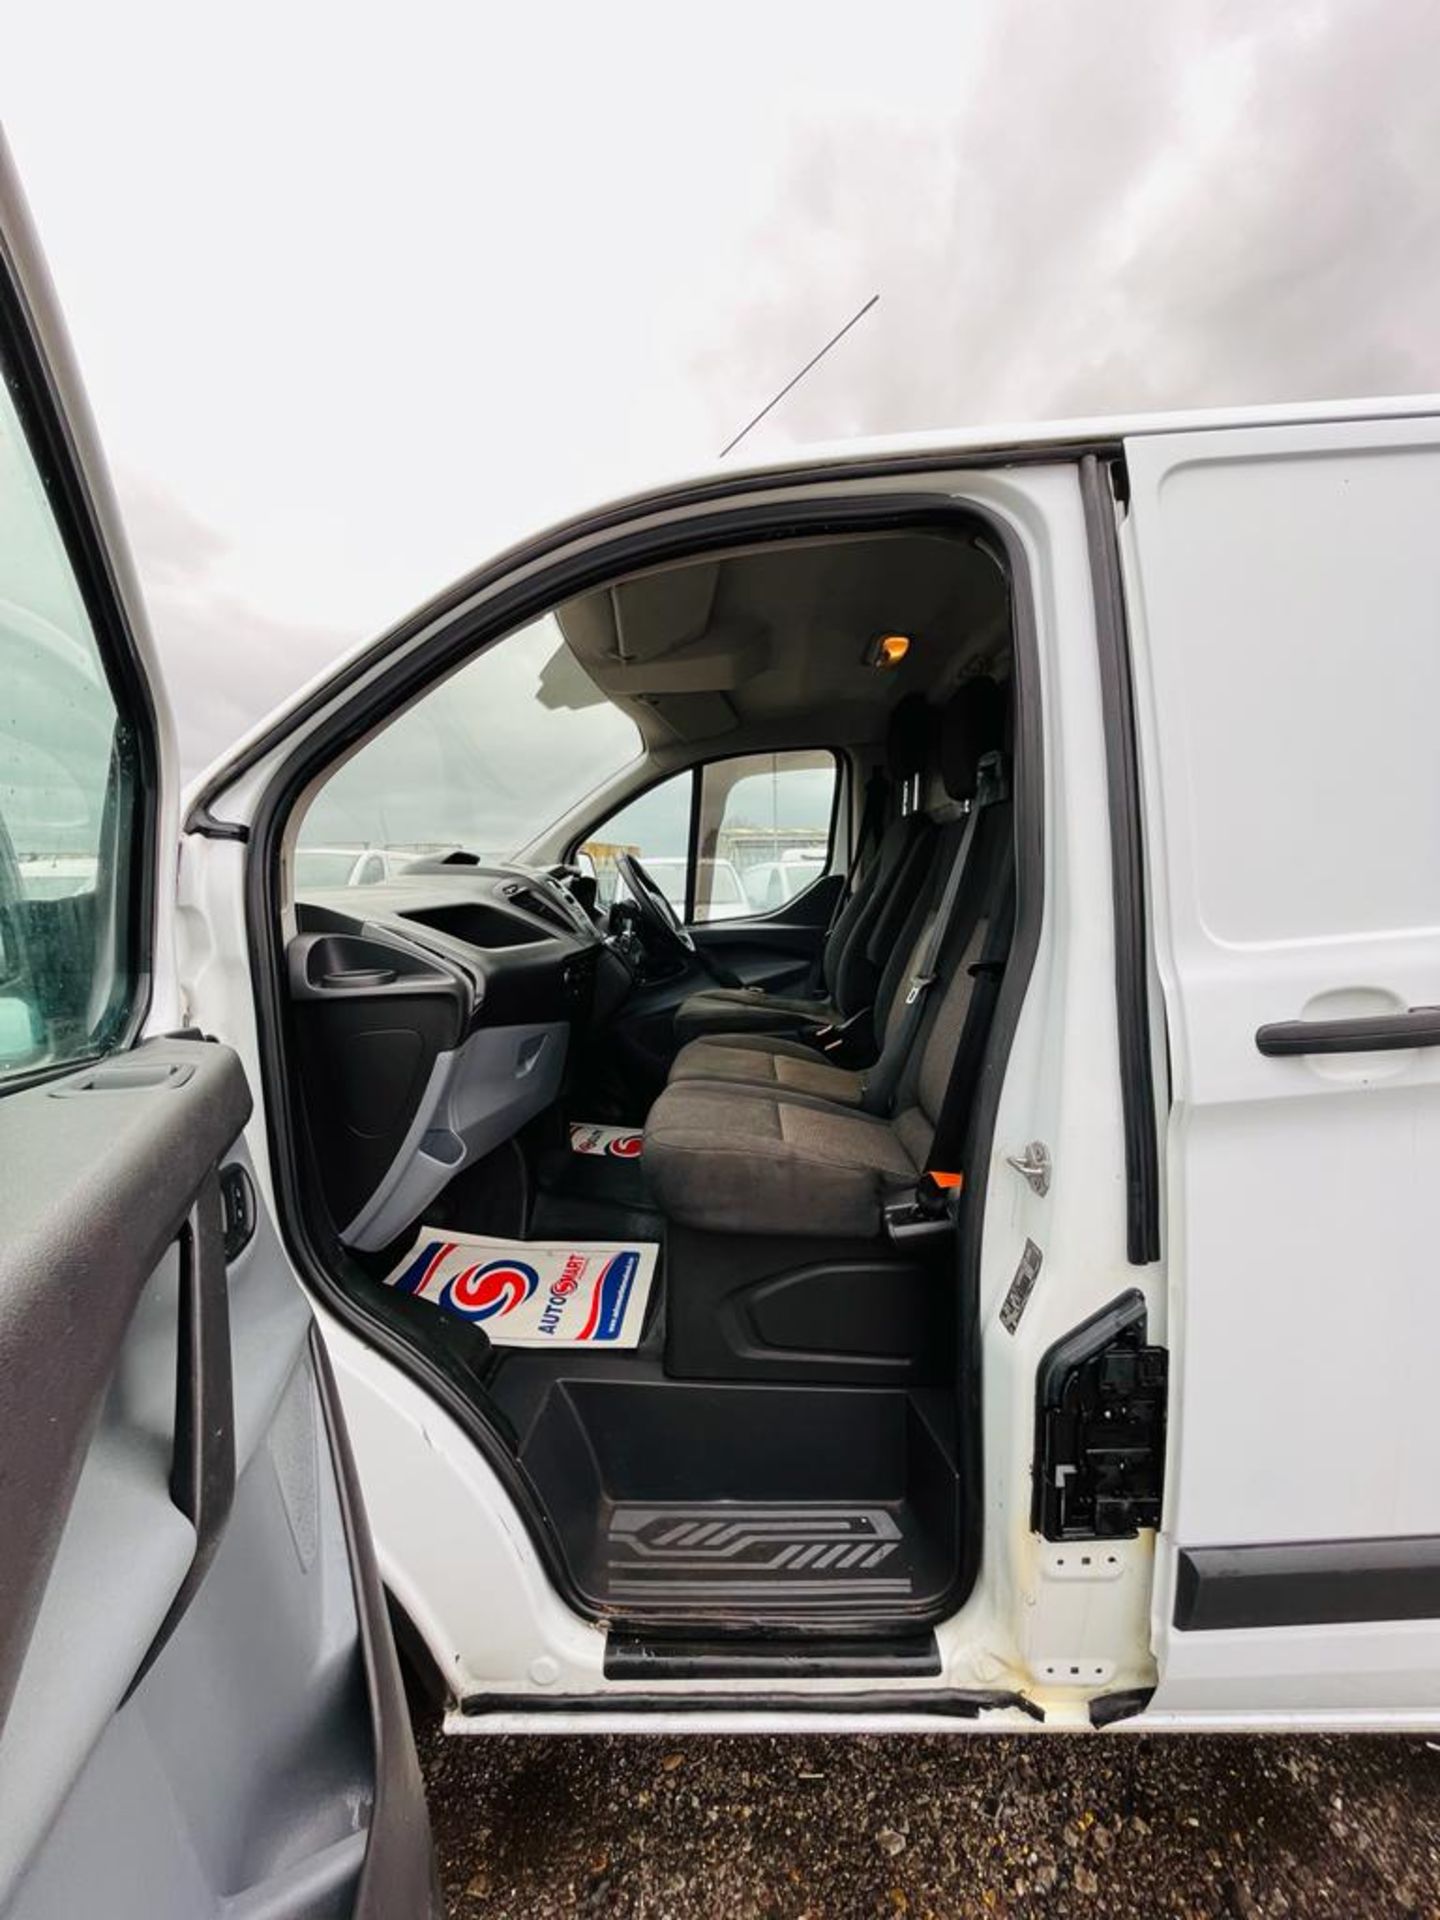 ** ON SALE ** Ford Transit Custom 2.2 TDCI EcoTech L1 H1 2014 '14 Reg' - Panel Van - Image 20 of 24